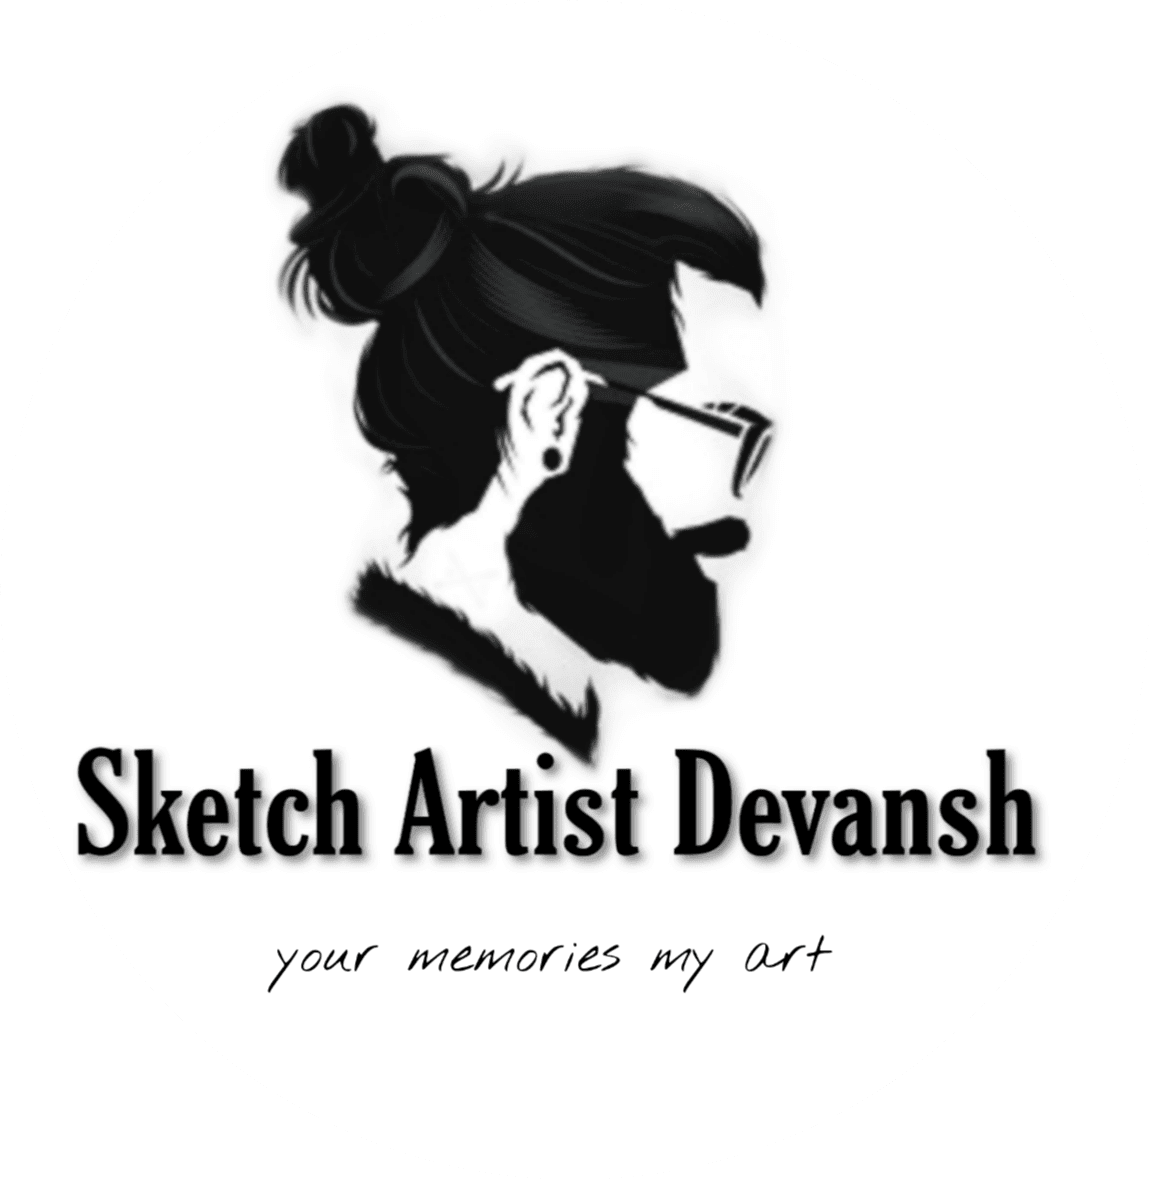 Sketch Artist Devansh